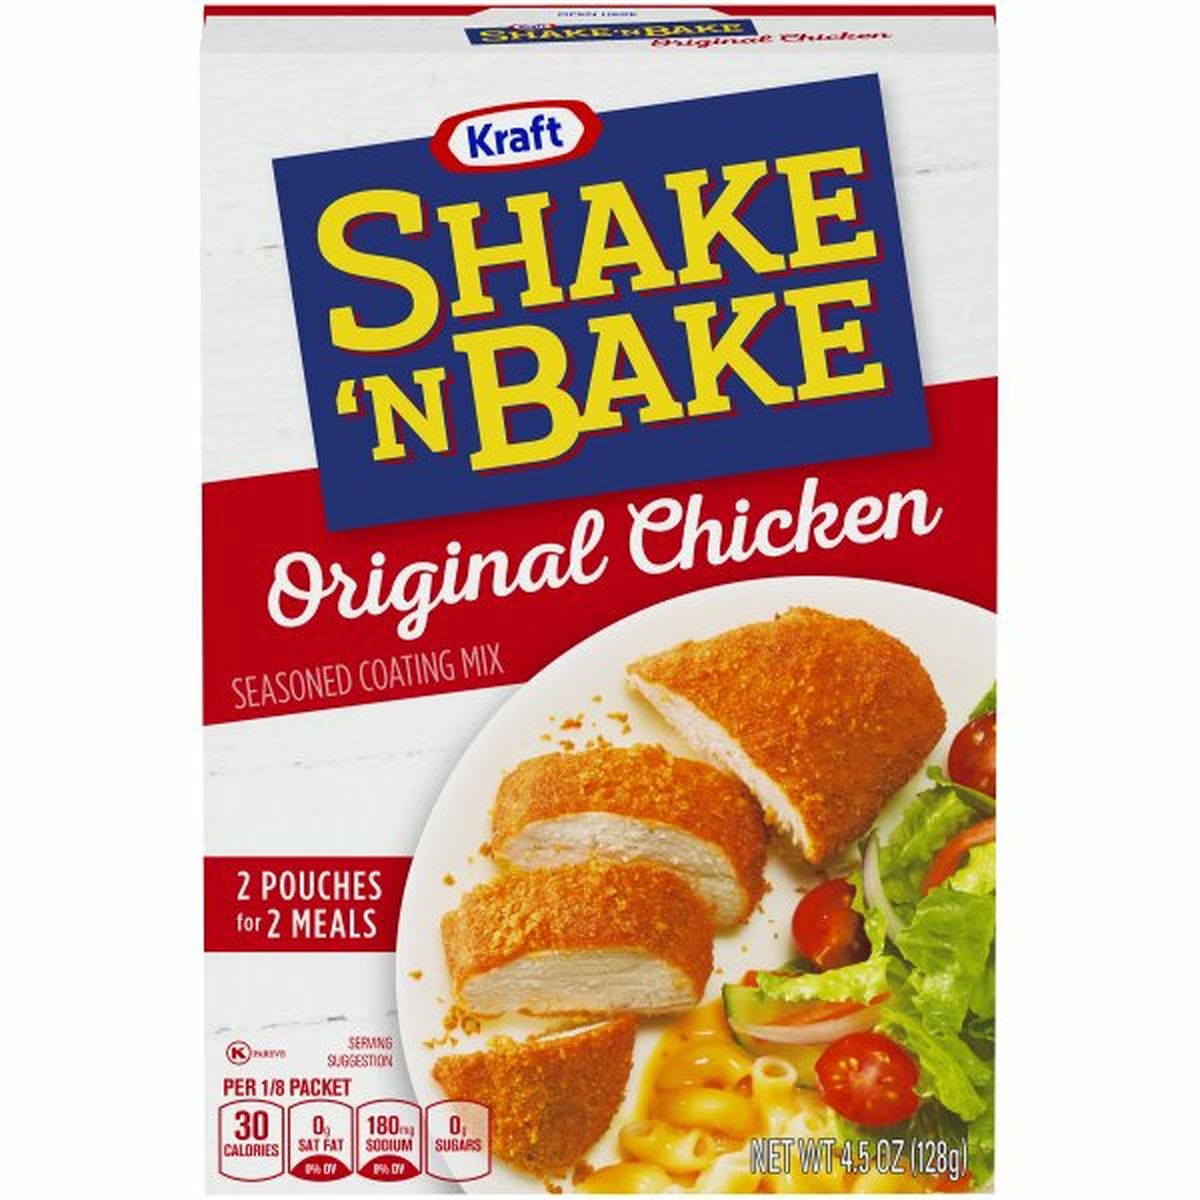 Calories in Shake 'N Bake Original Chicken Seasoned Coating Mix